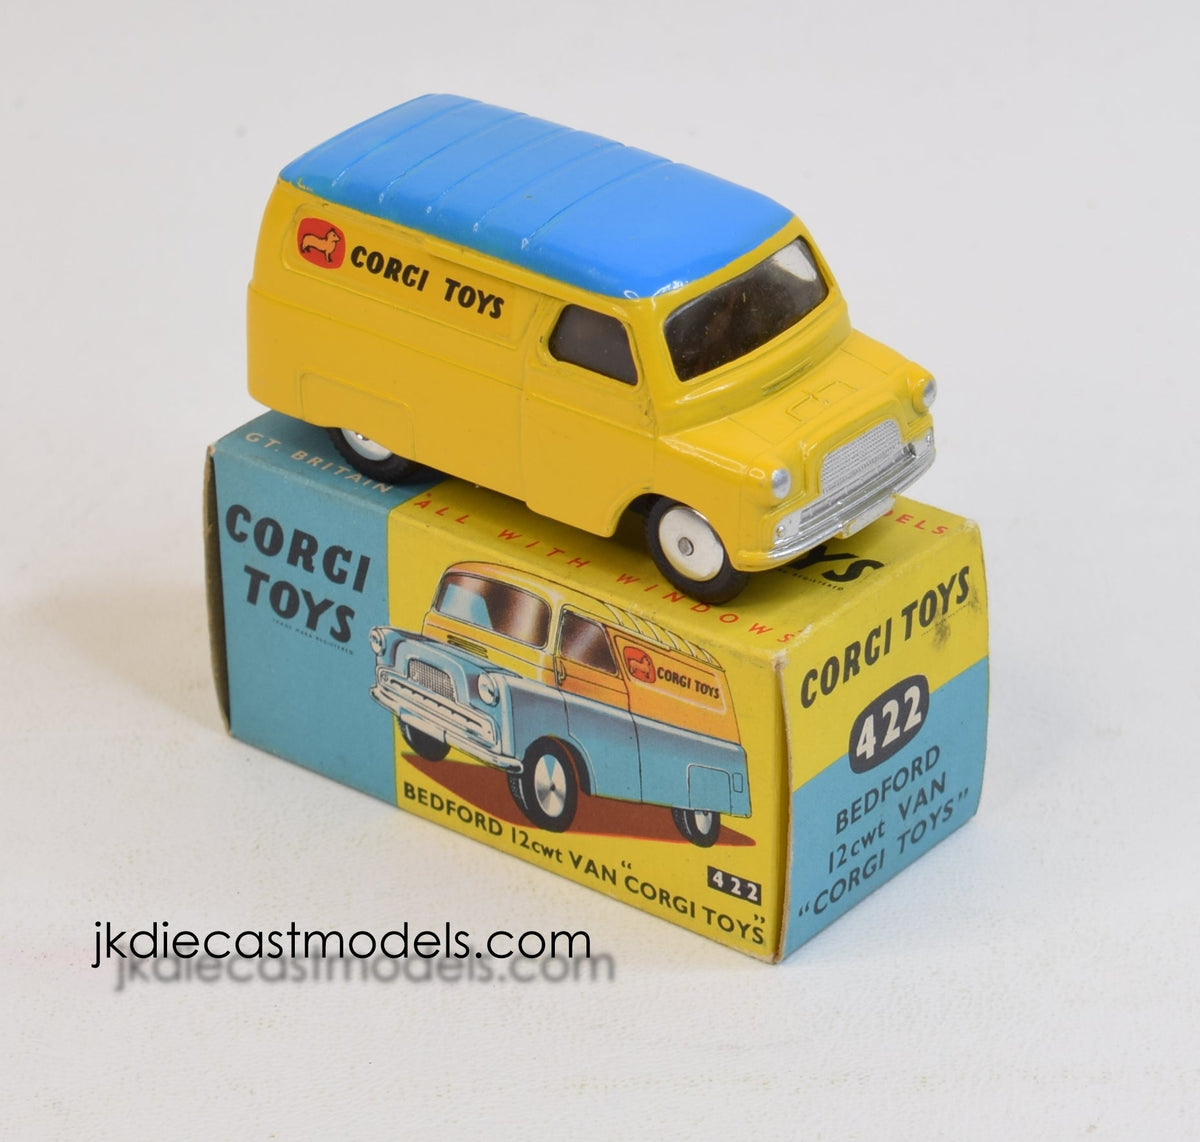 Corgi Toys 422 Bedford Van 'Corgi Toys' Virtually Mint/Nice box